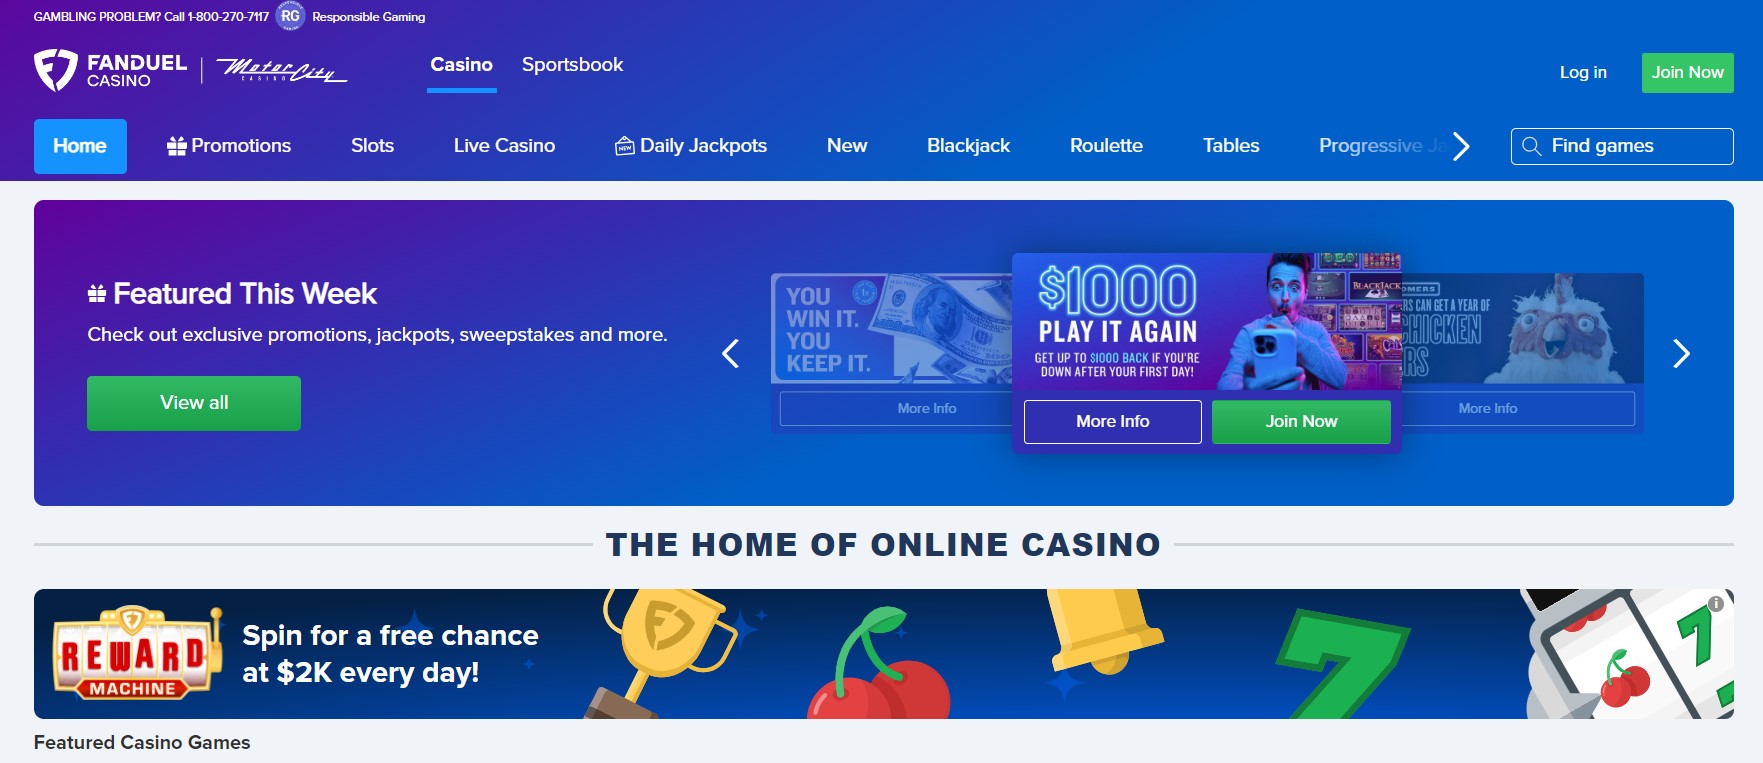 fanduel casino homepage